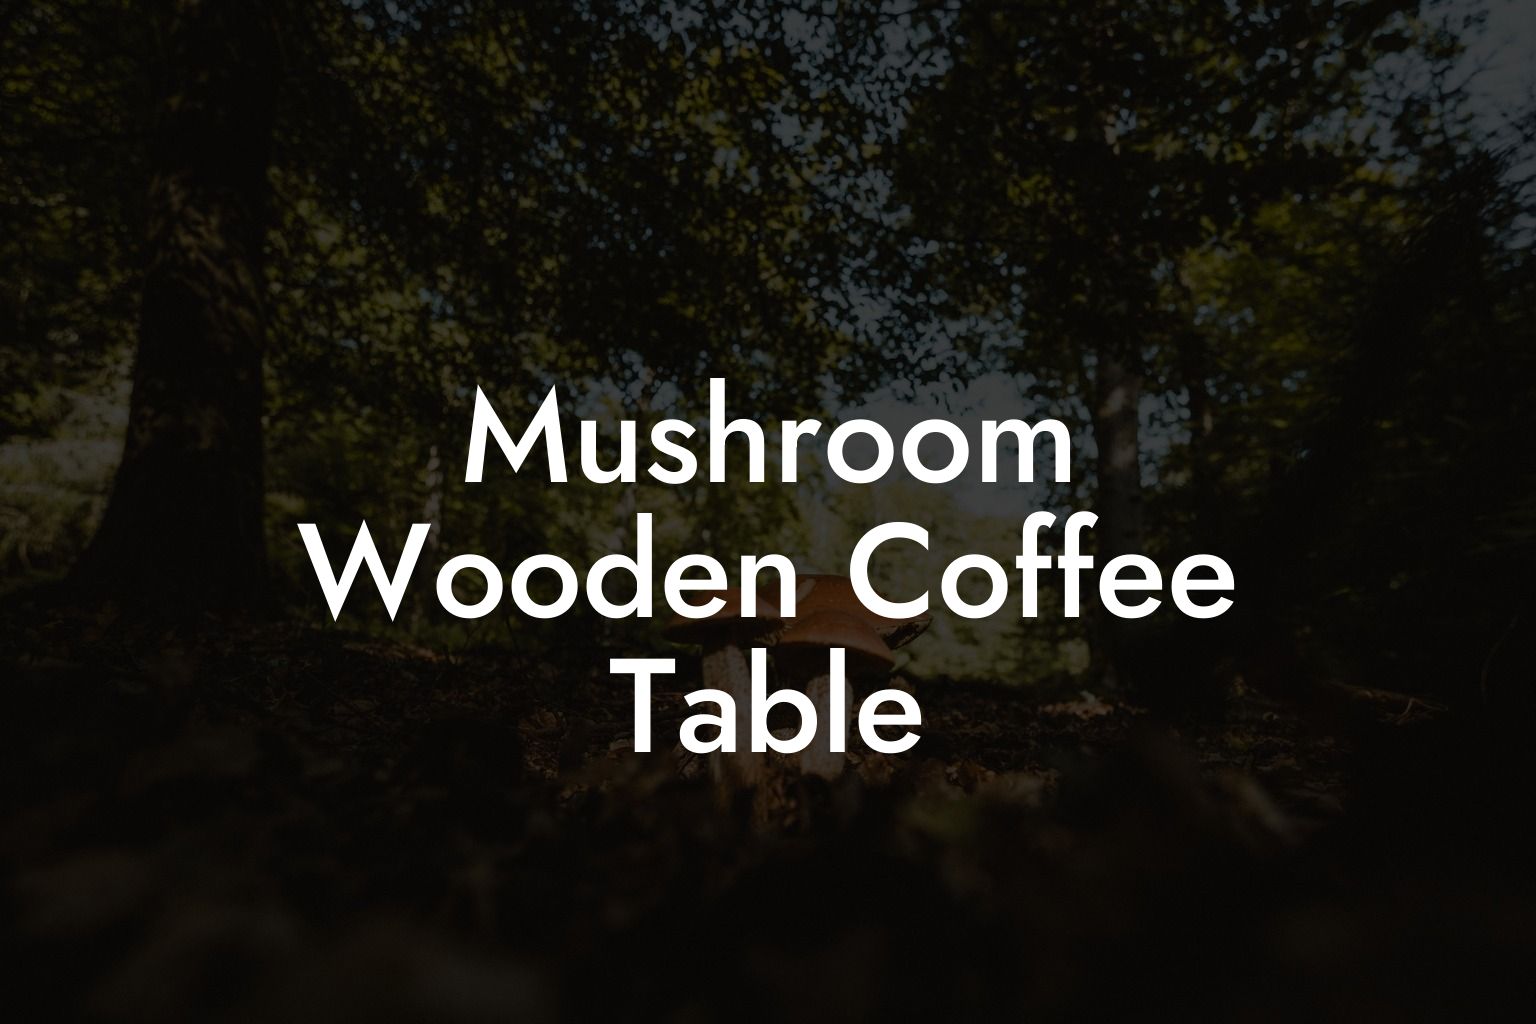 Mushroom Wooden Coffee Table